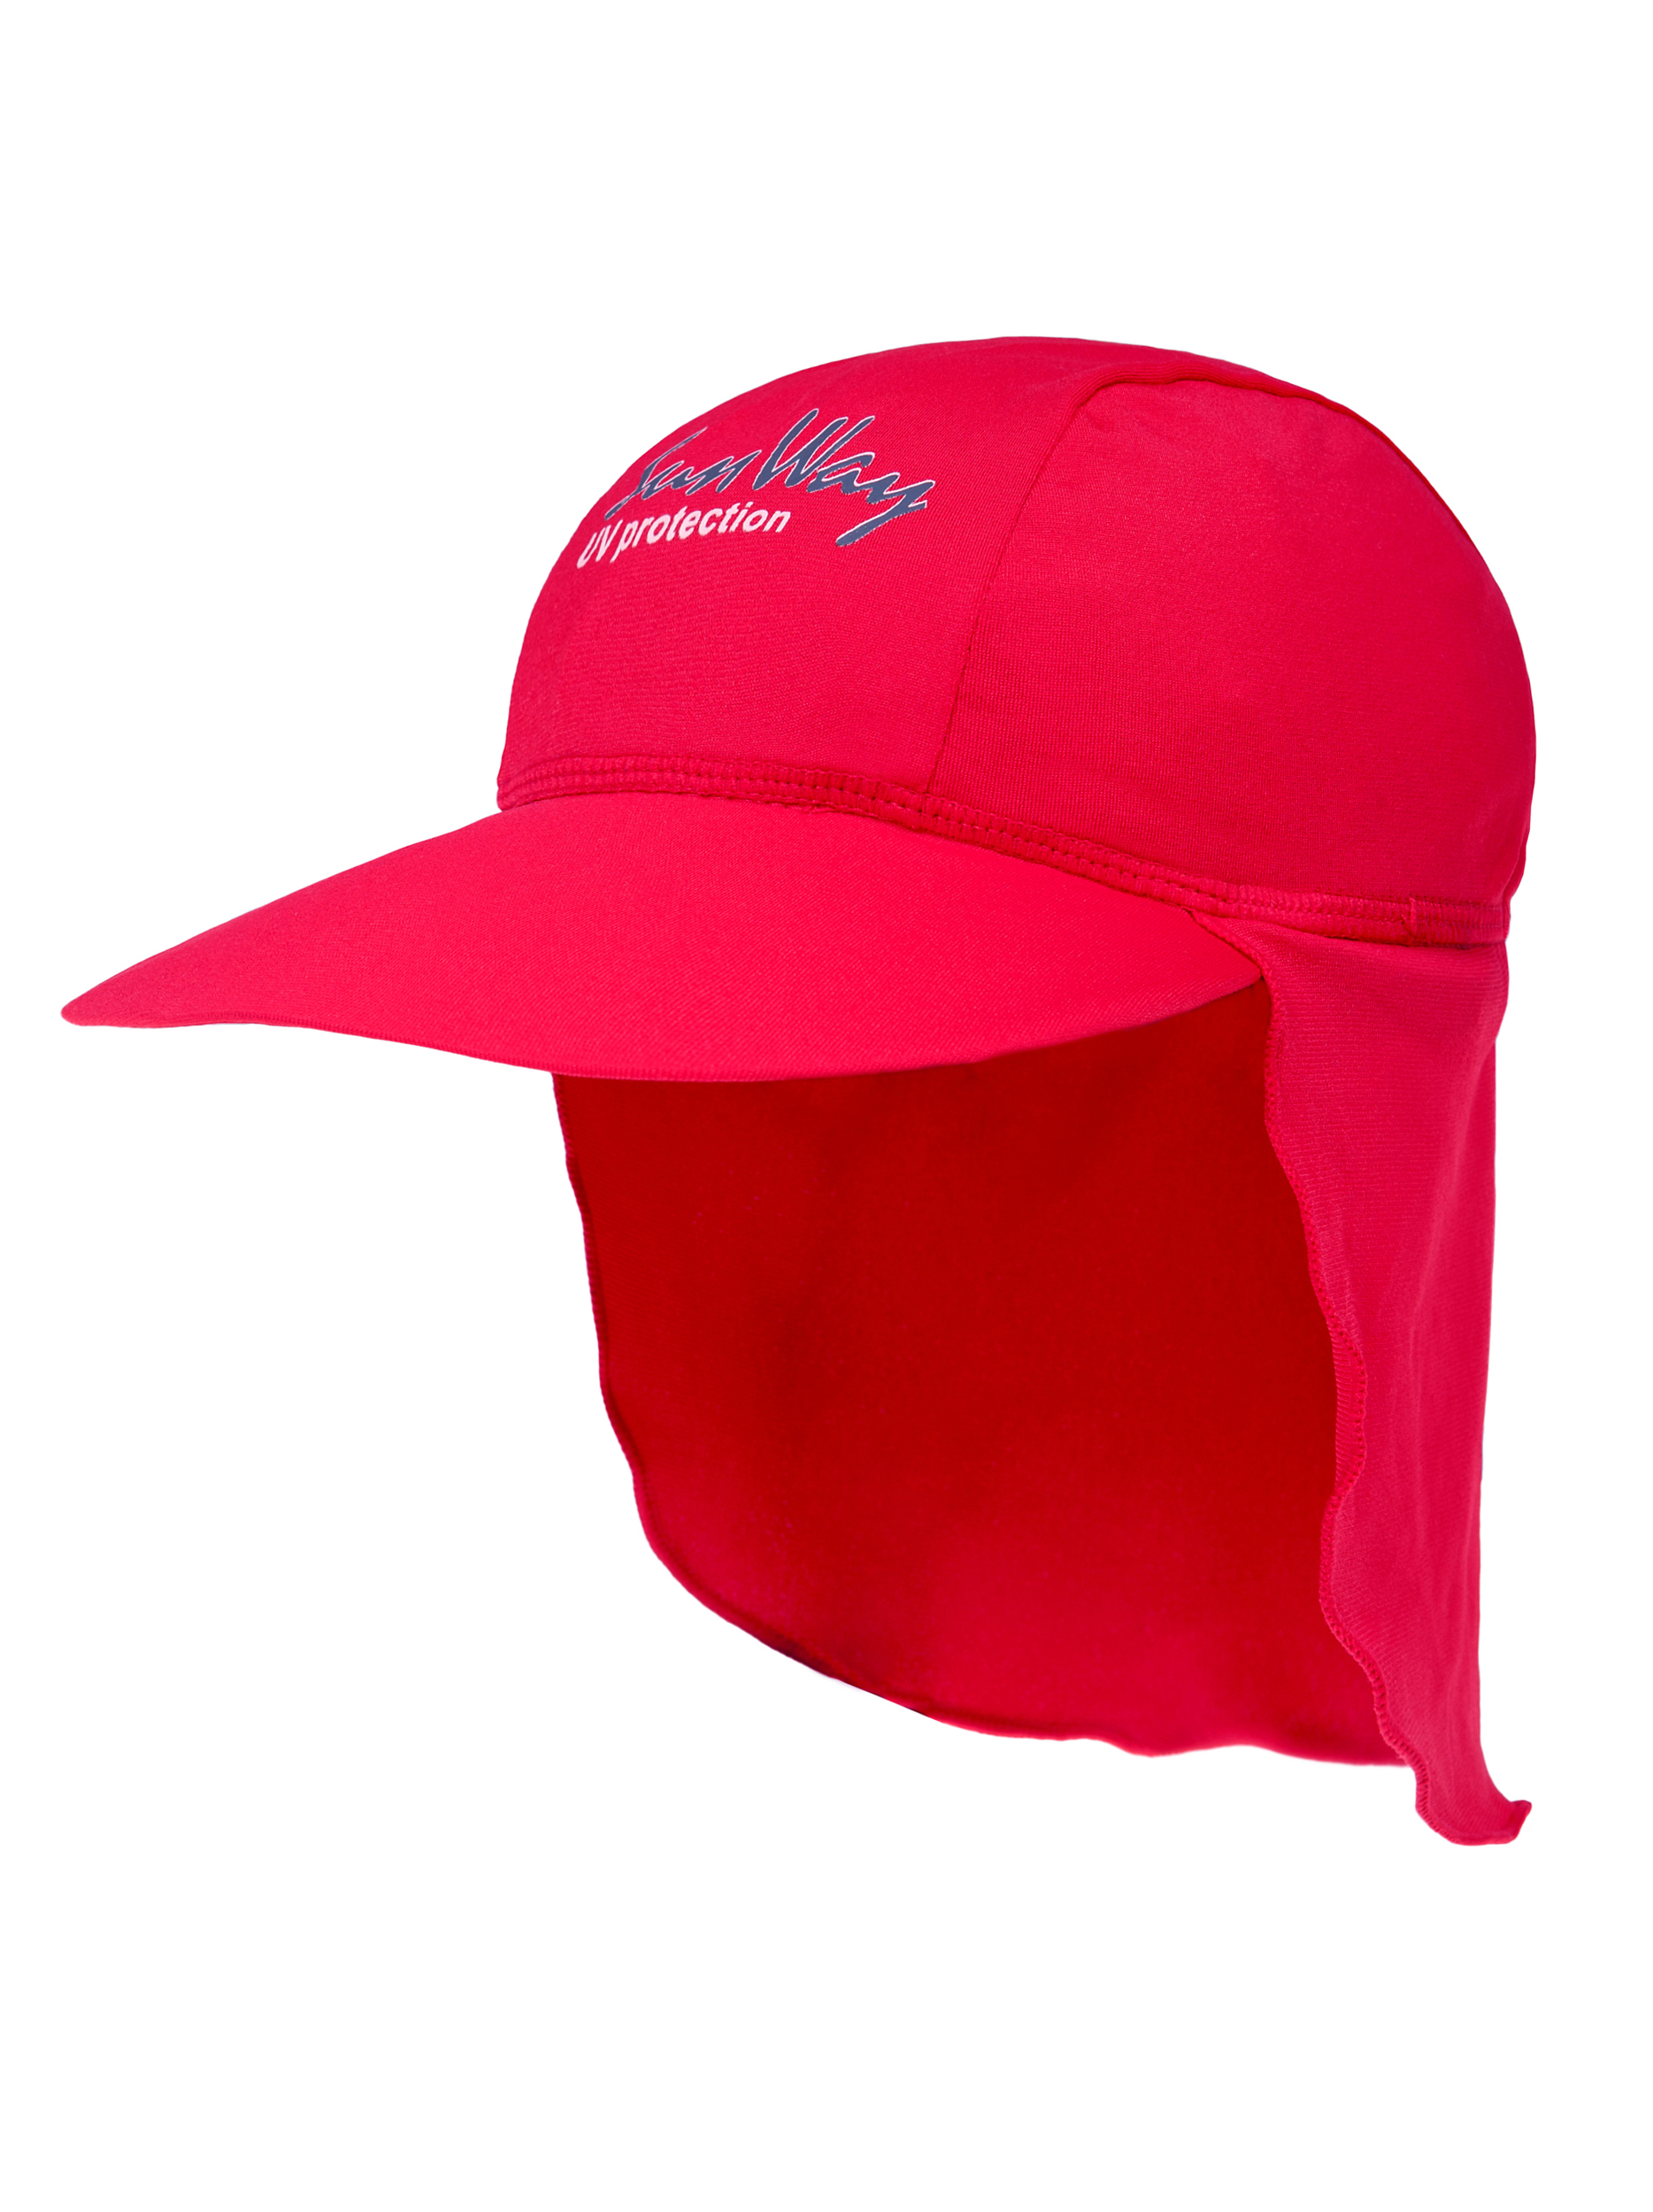 red legionnaire hat